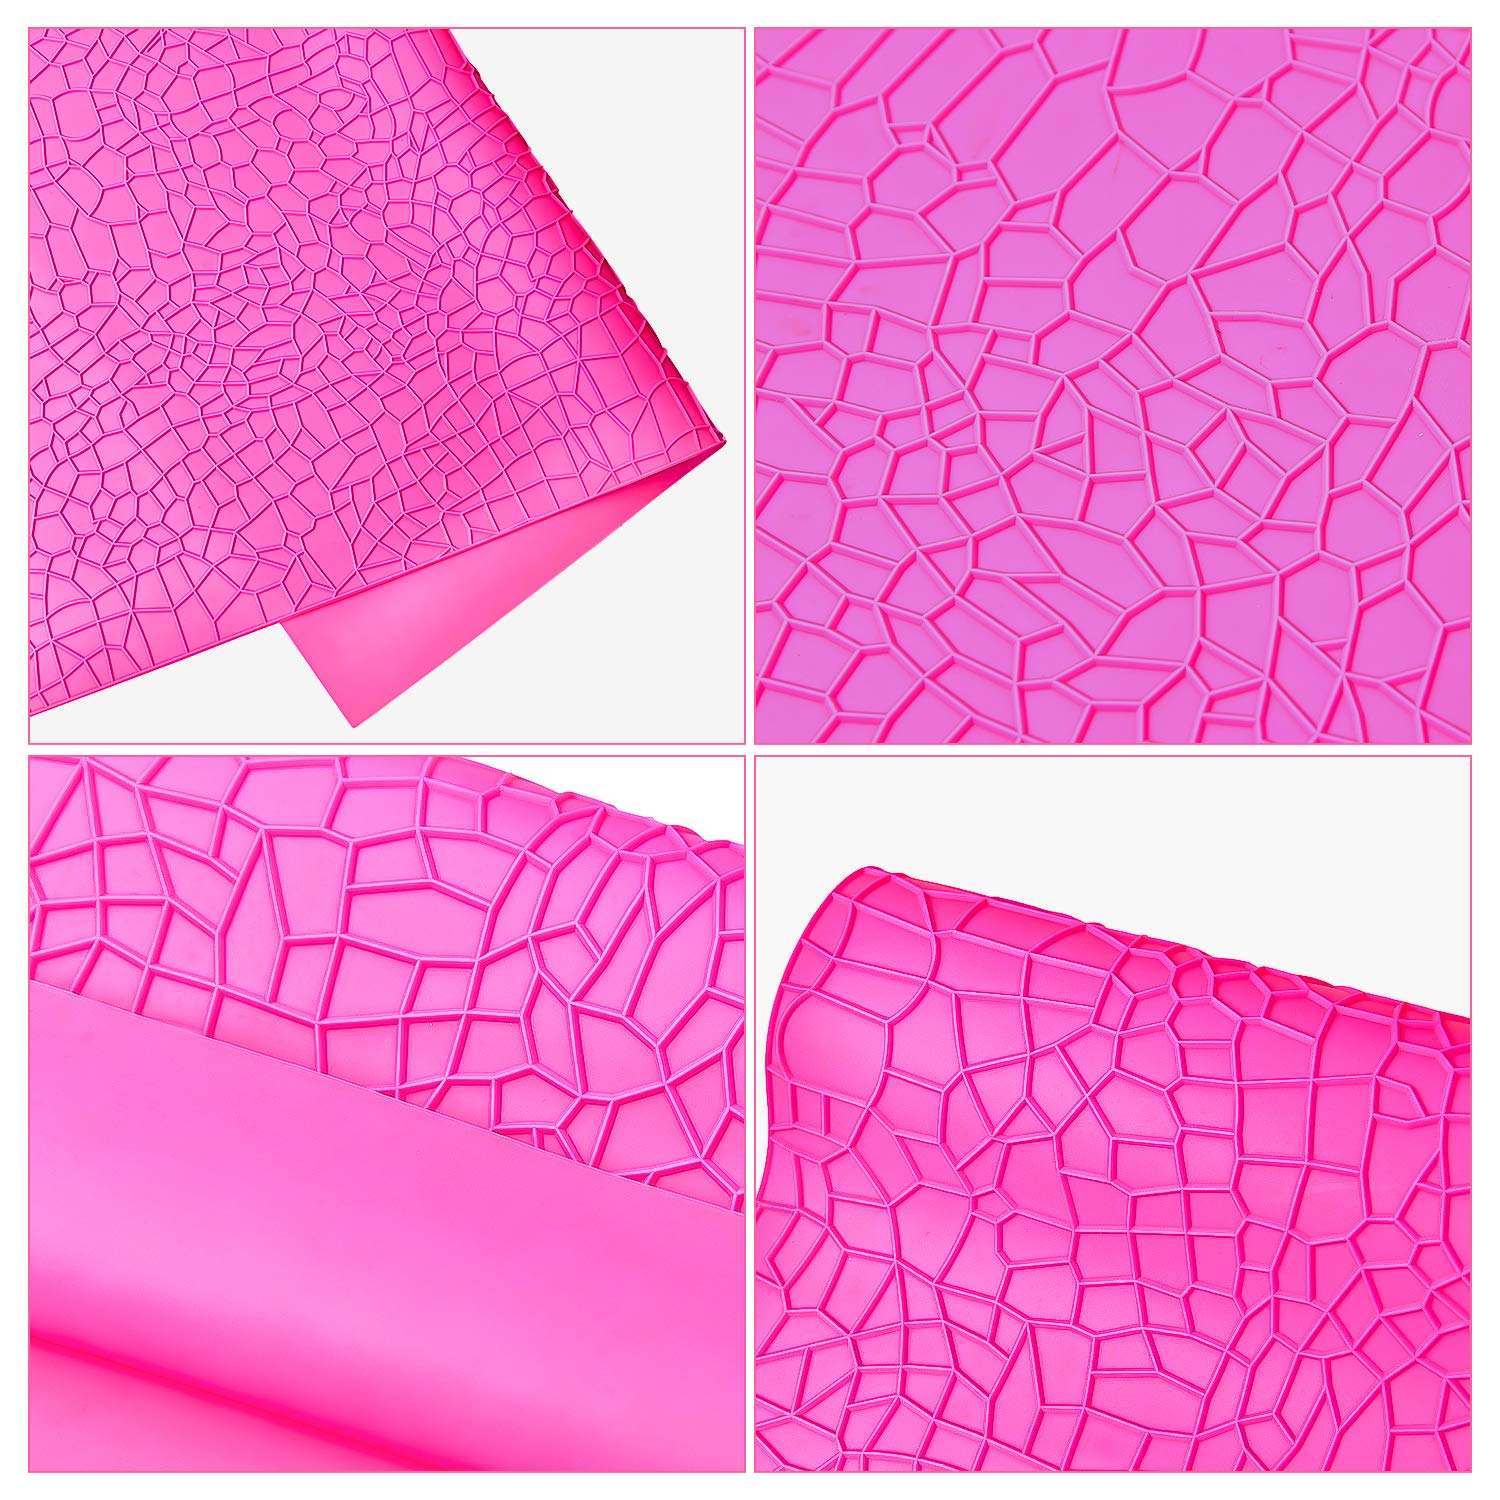 Warmoor Silicone Cake Fondant Mat, Crocodile Alligator Pattern Impression Lace Mold (22 x 14 inches, Pink Crocodile)